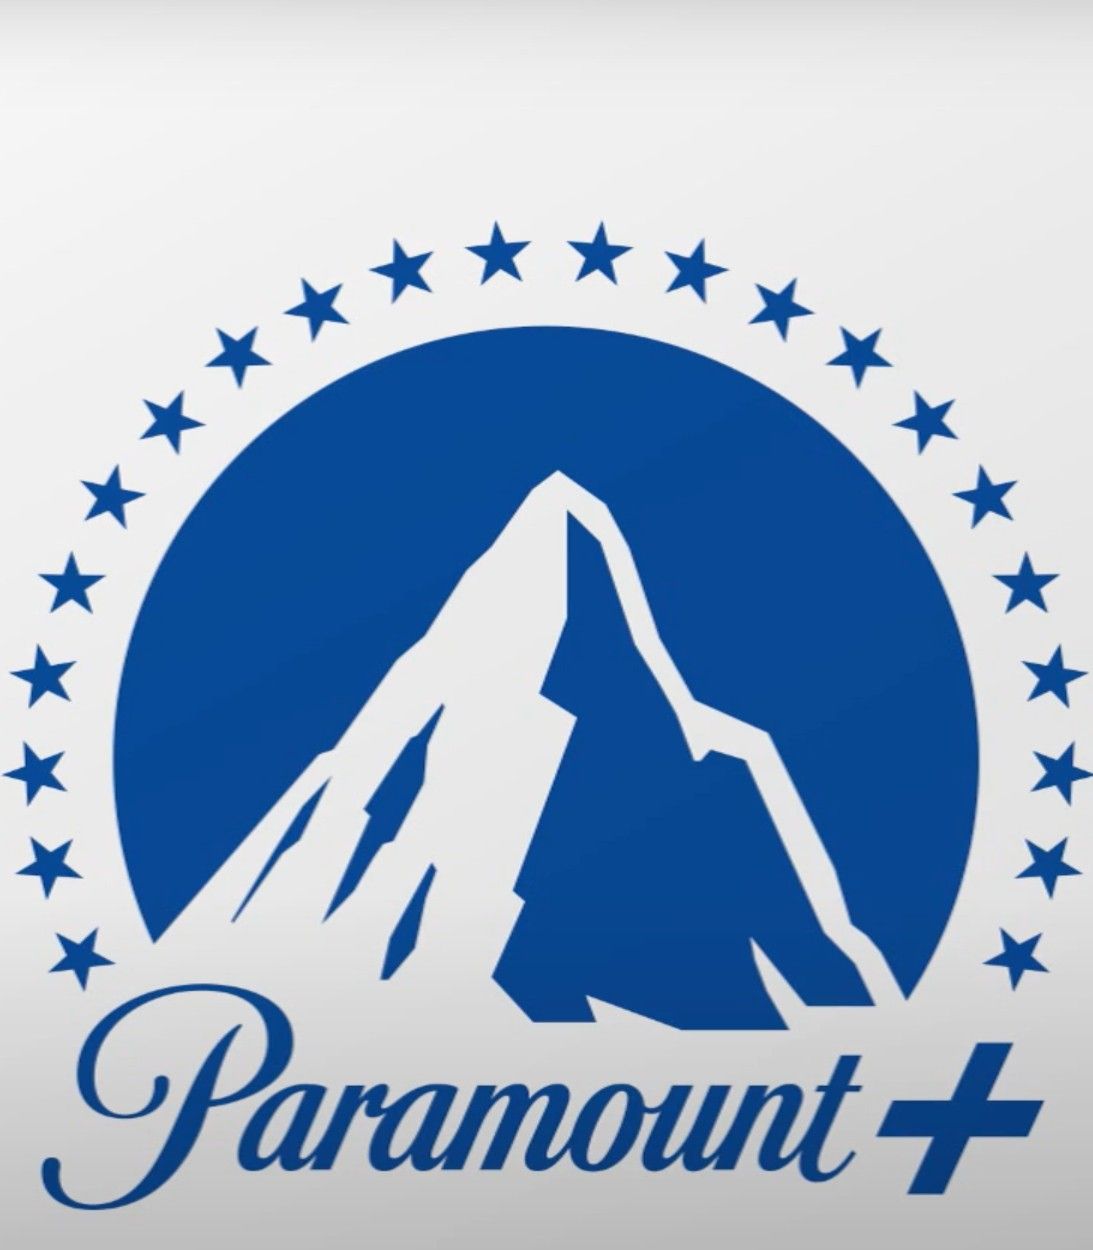 Paramount+ logo vertical